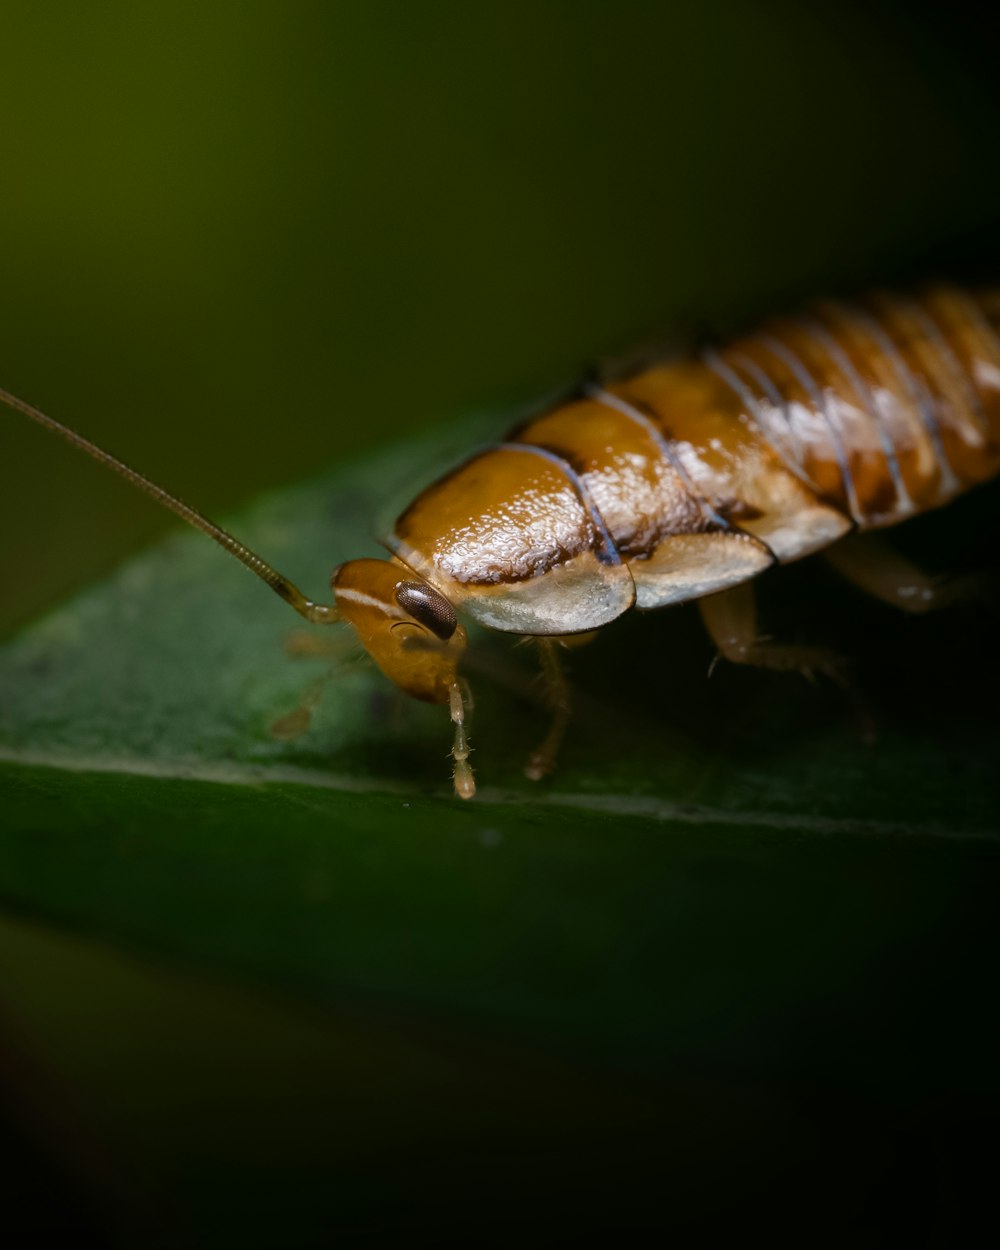 a close up of a bug